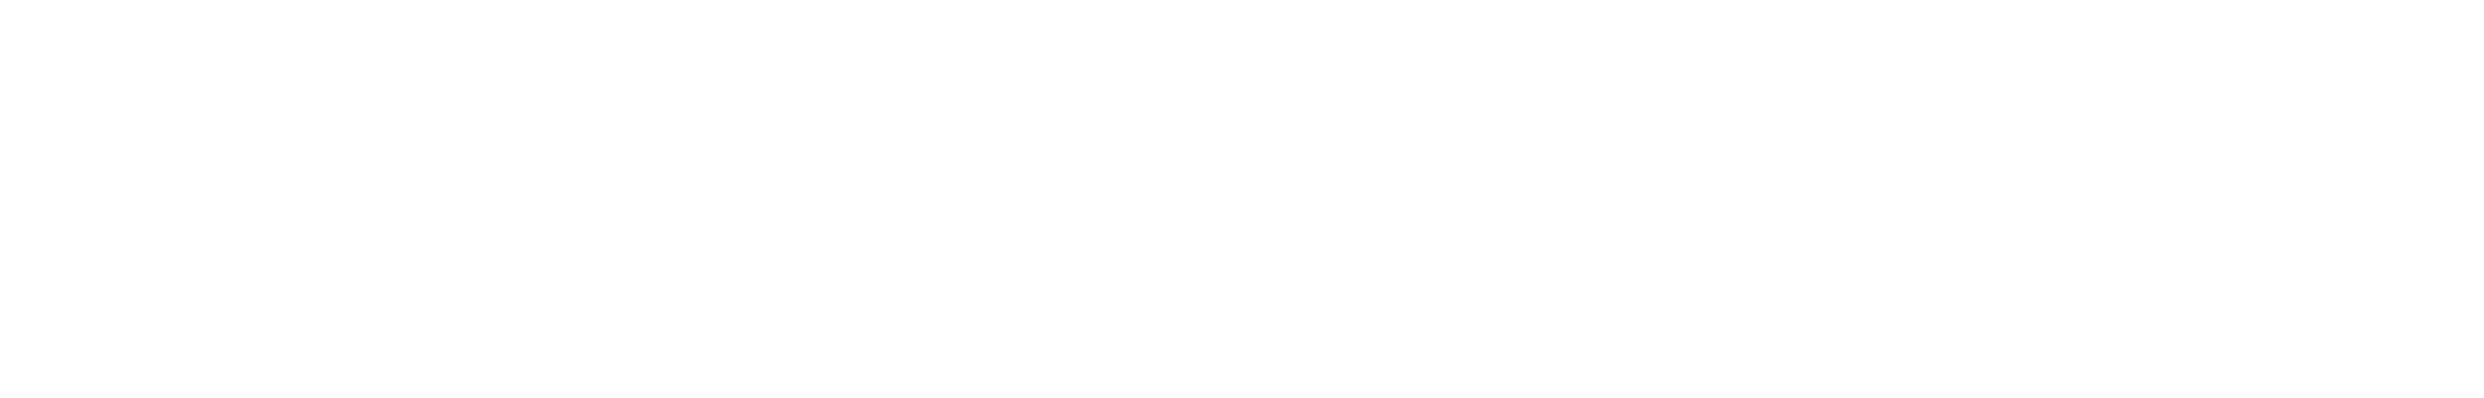 Point32Health